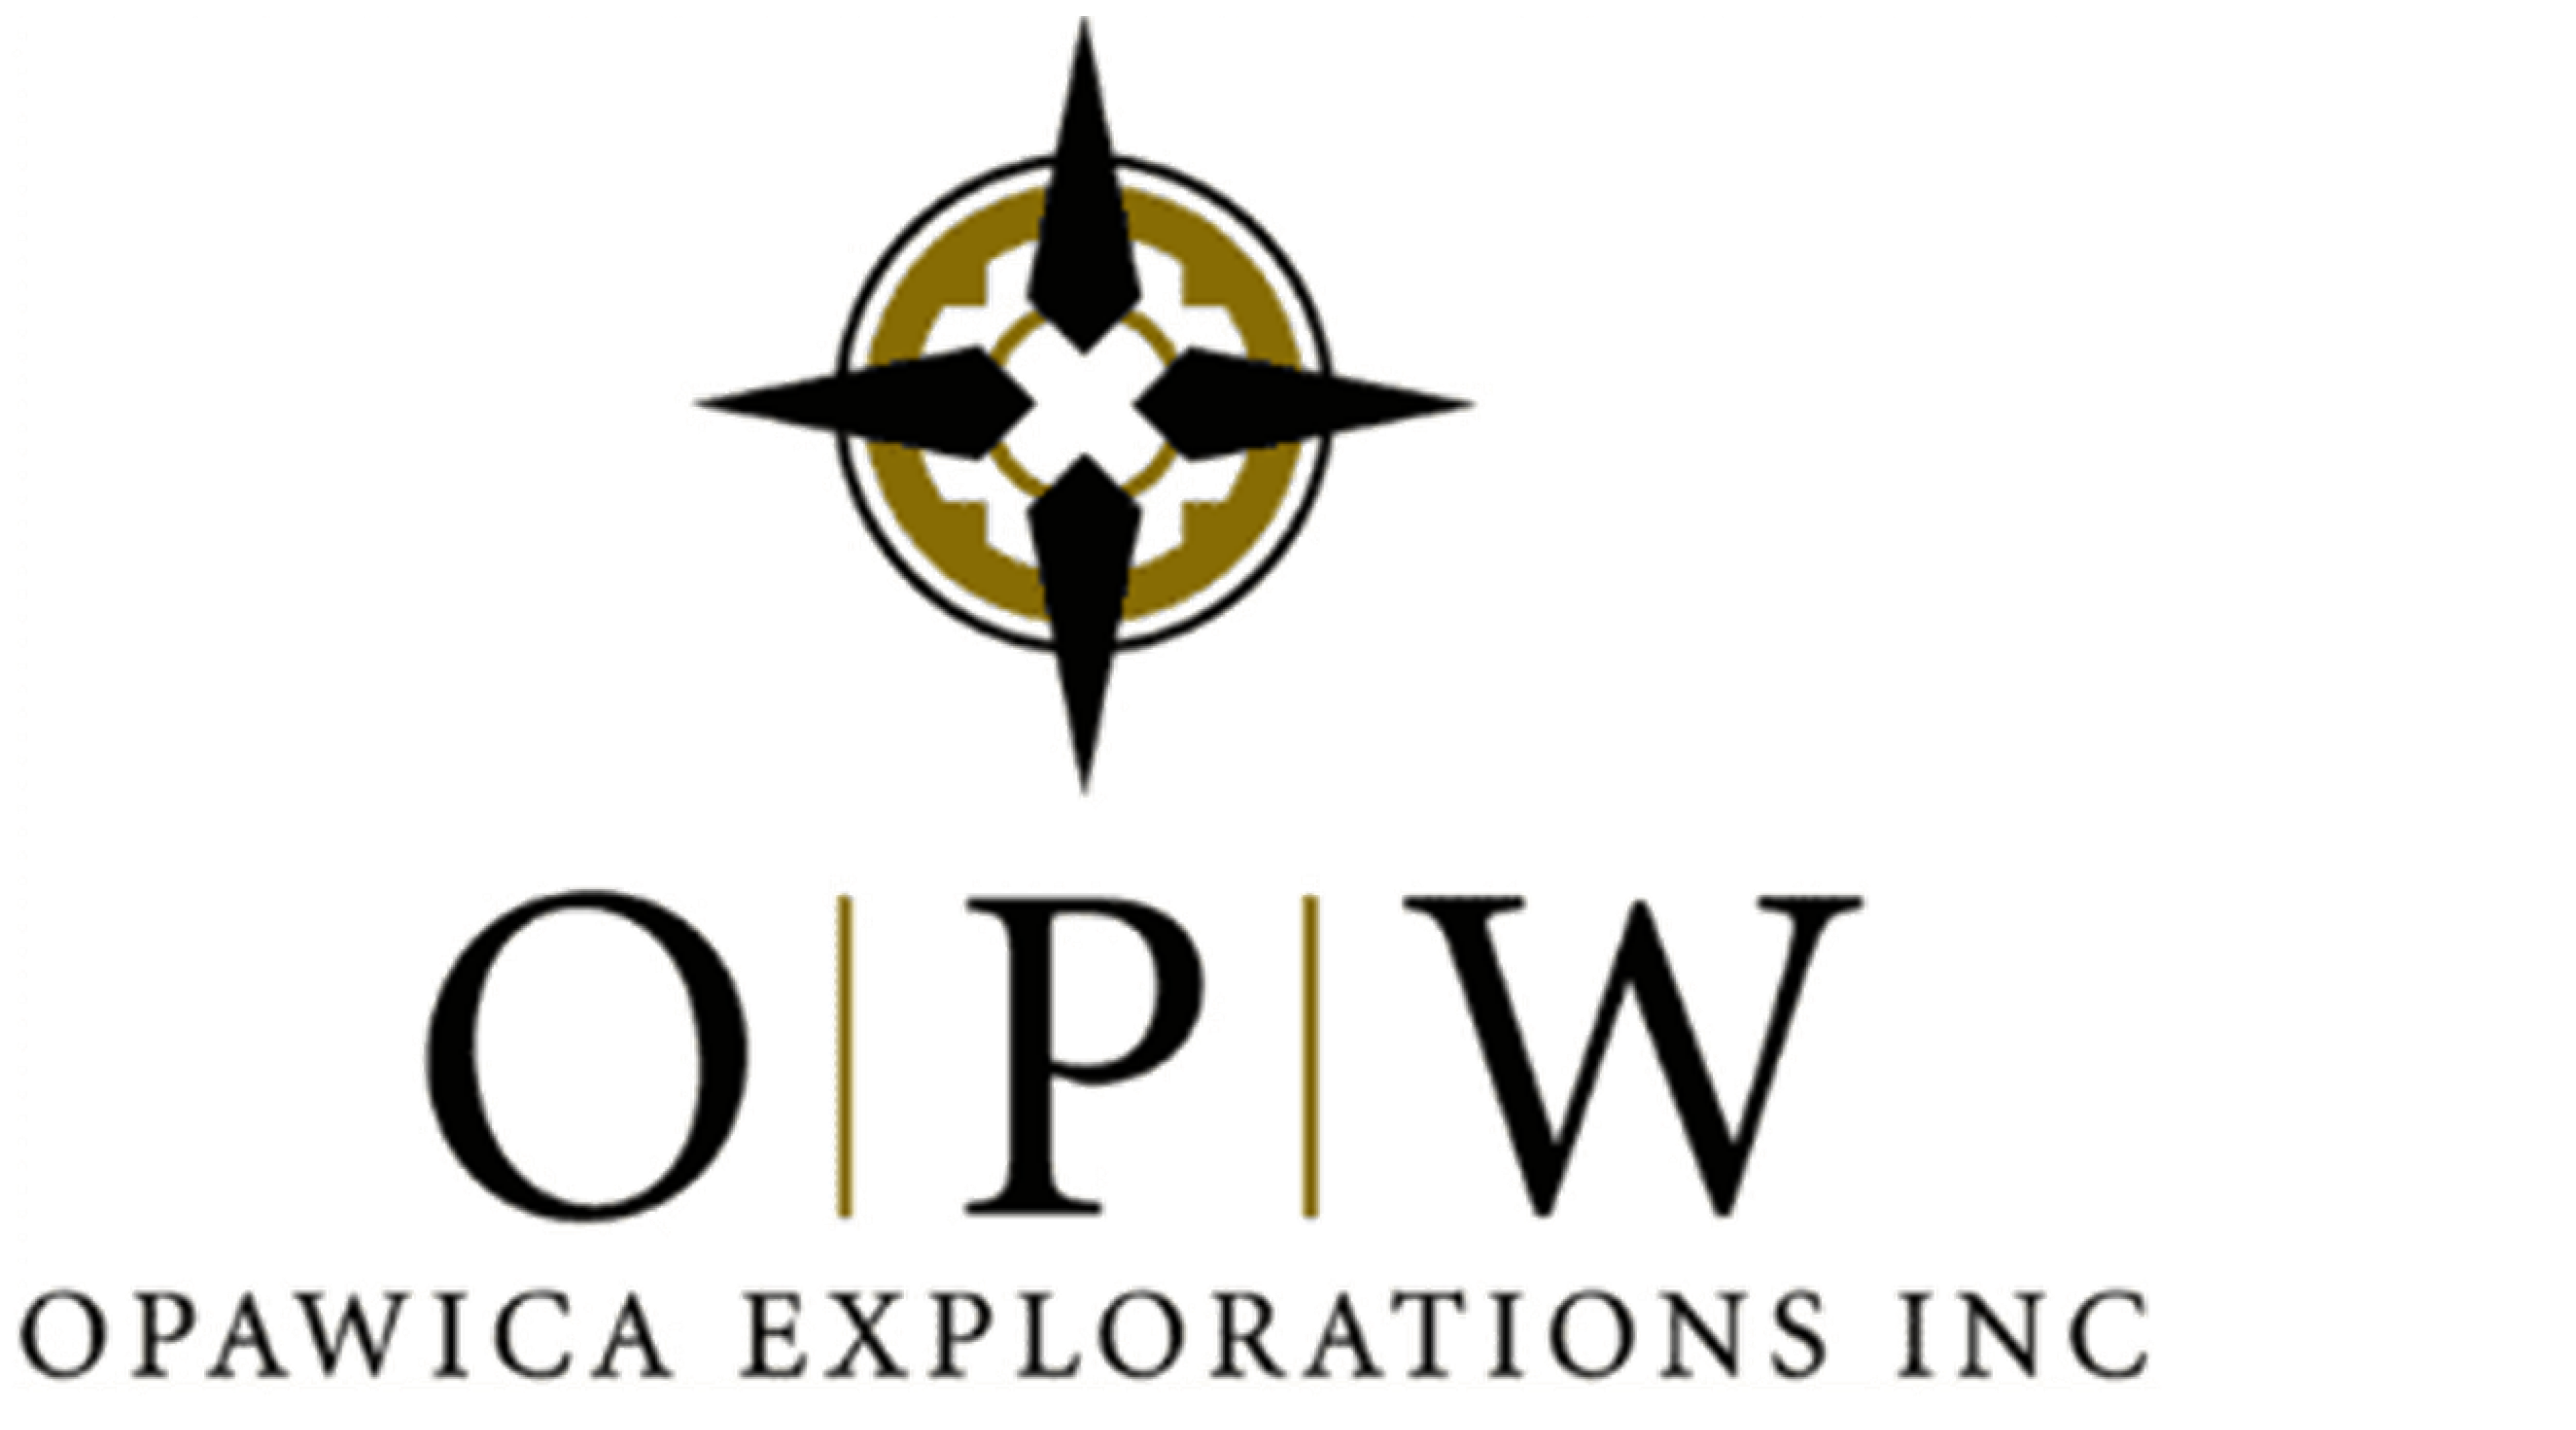 Opawica Explorations Inc.